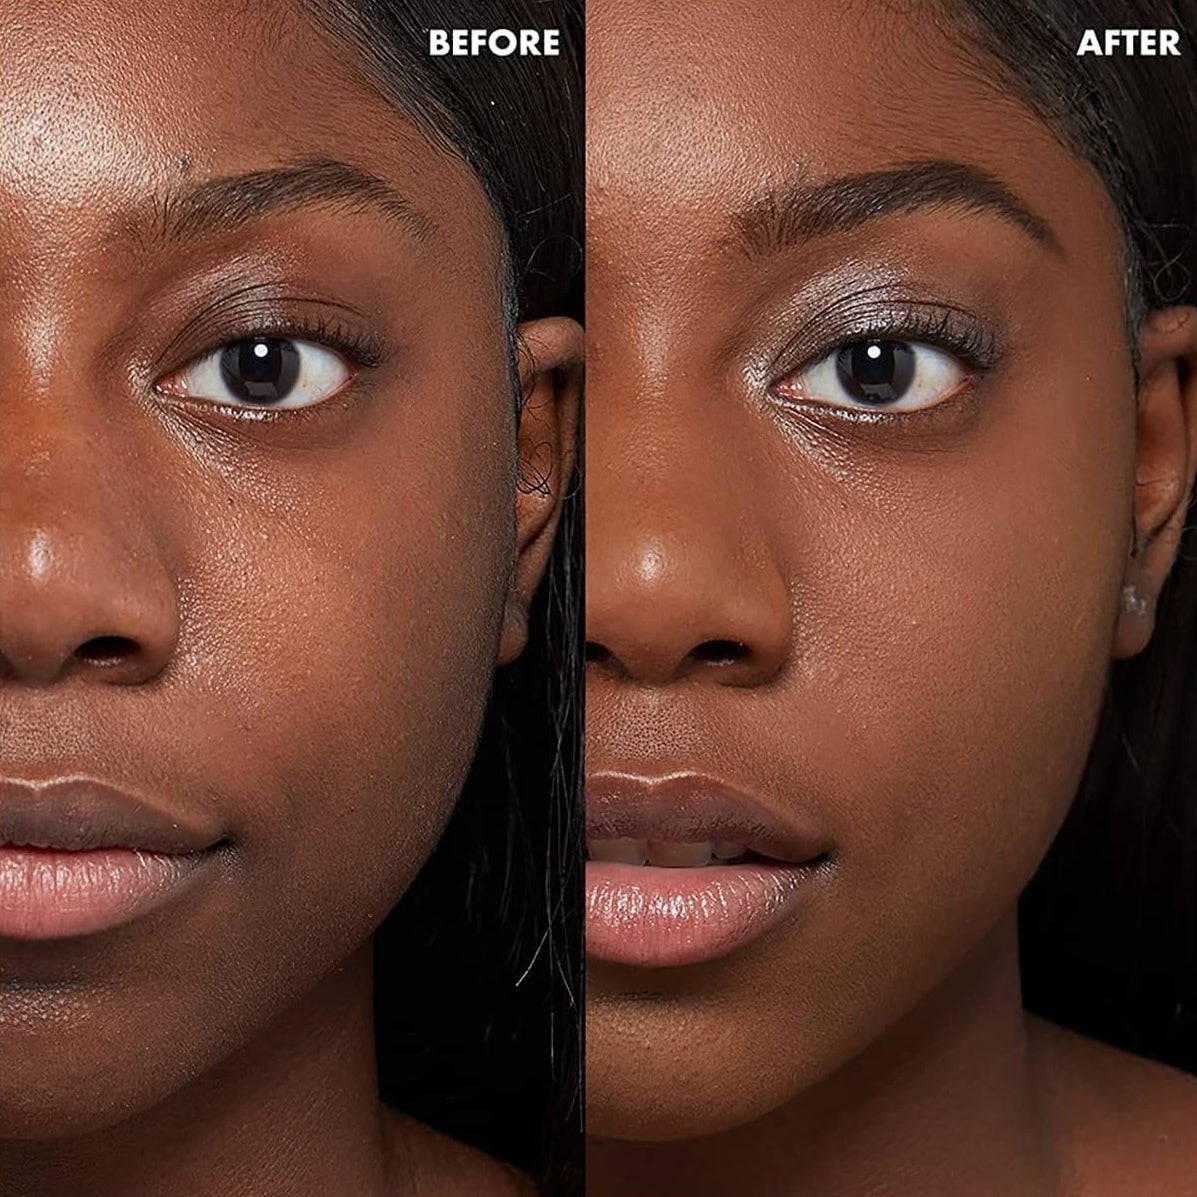 models skin before and after using Nyx shine killer primer